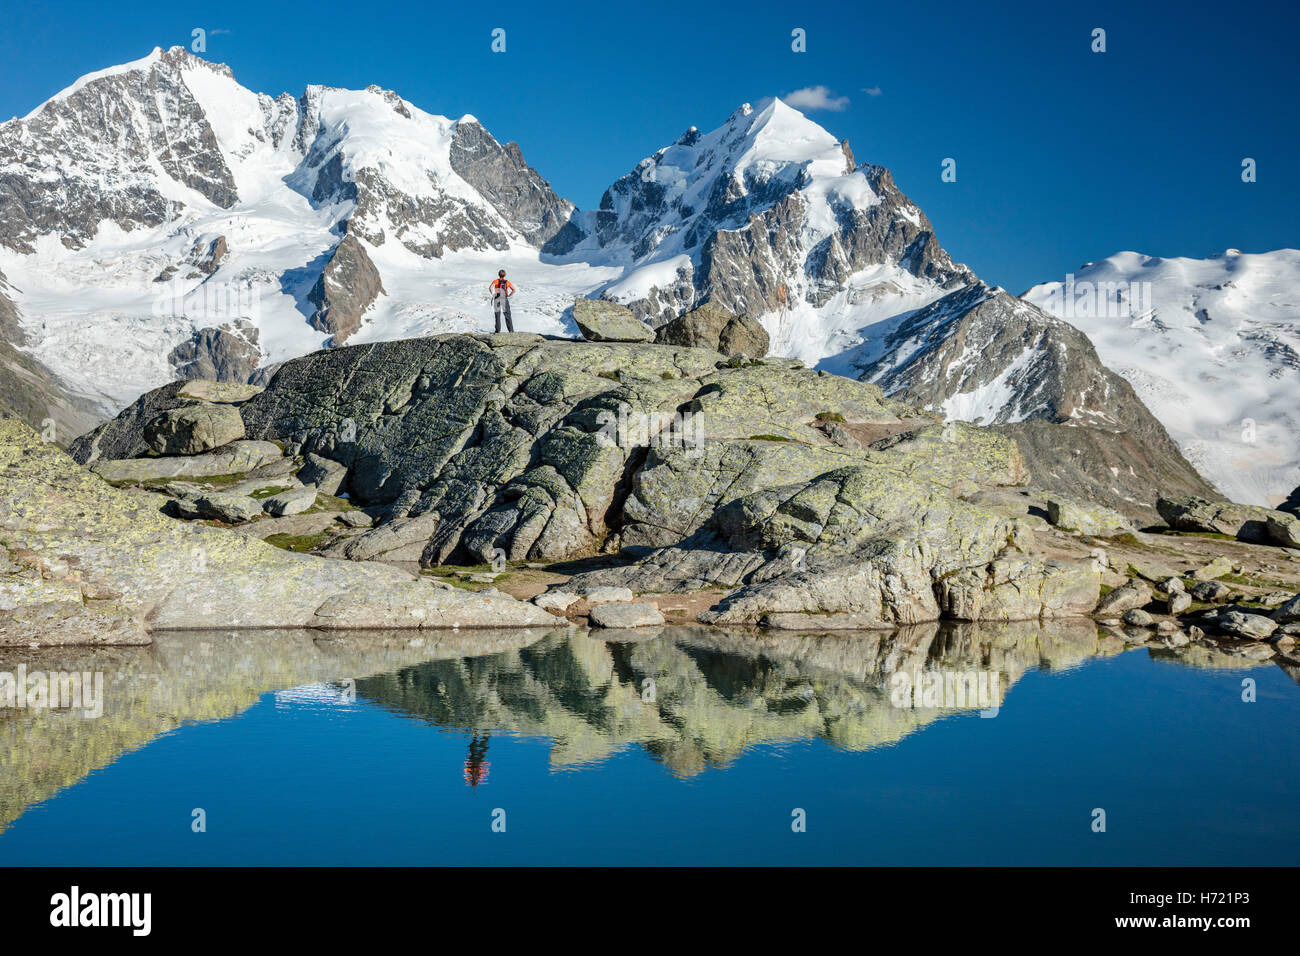 Reflection of hiker beneath Piz Bernina and Piz Rosbeg. Fuorcla Surlej, Silvaplana, Berniner Alps, Graubunden, Switzerland. Stock Photo